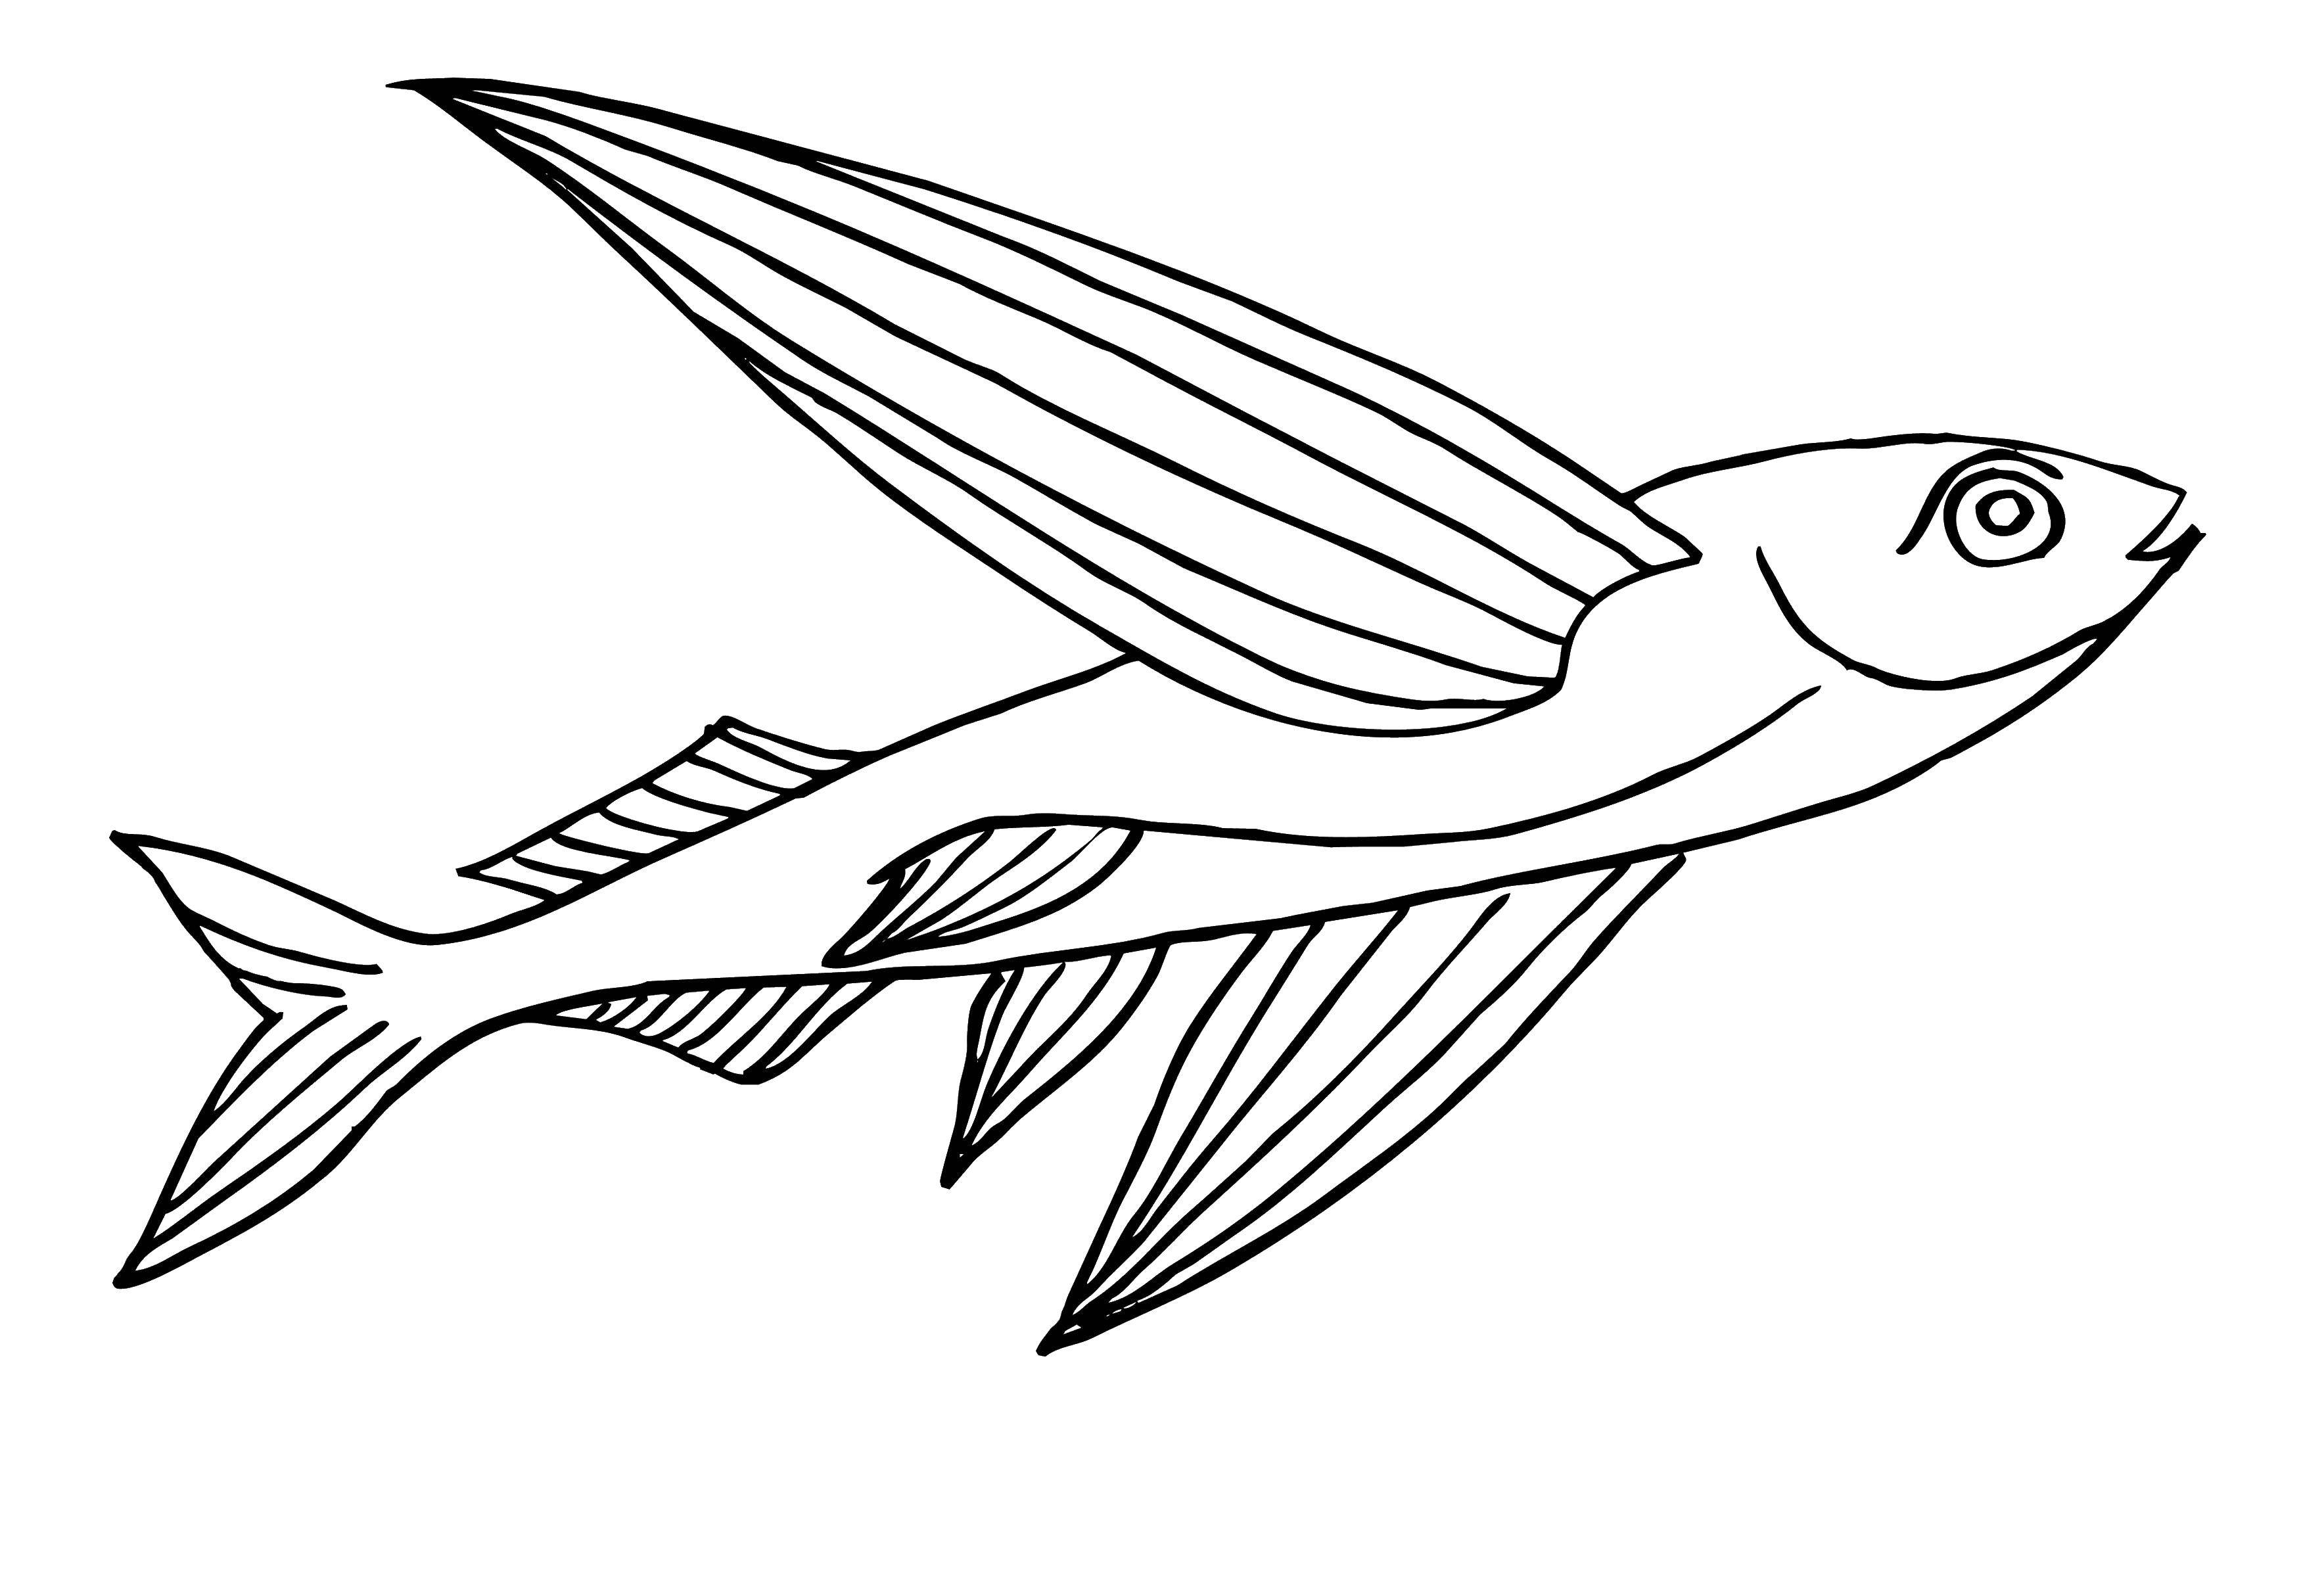 Coloring Winged fish. Category fish. Tags:  fish.